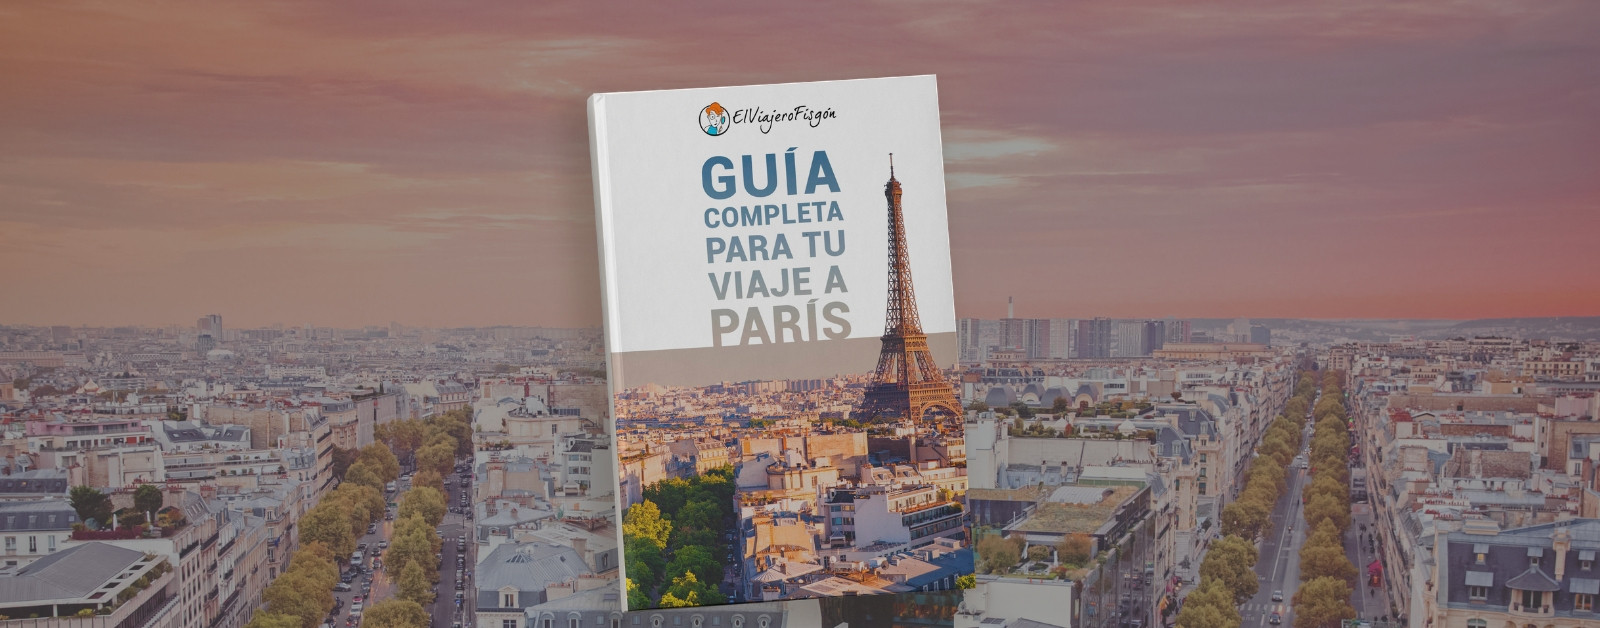 Guía completa para tu viaje a París